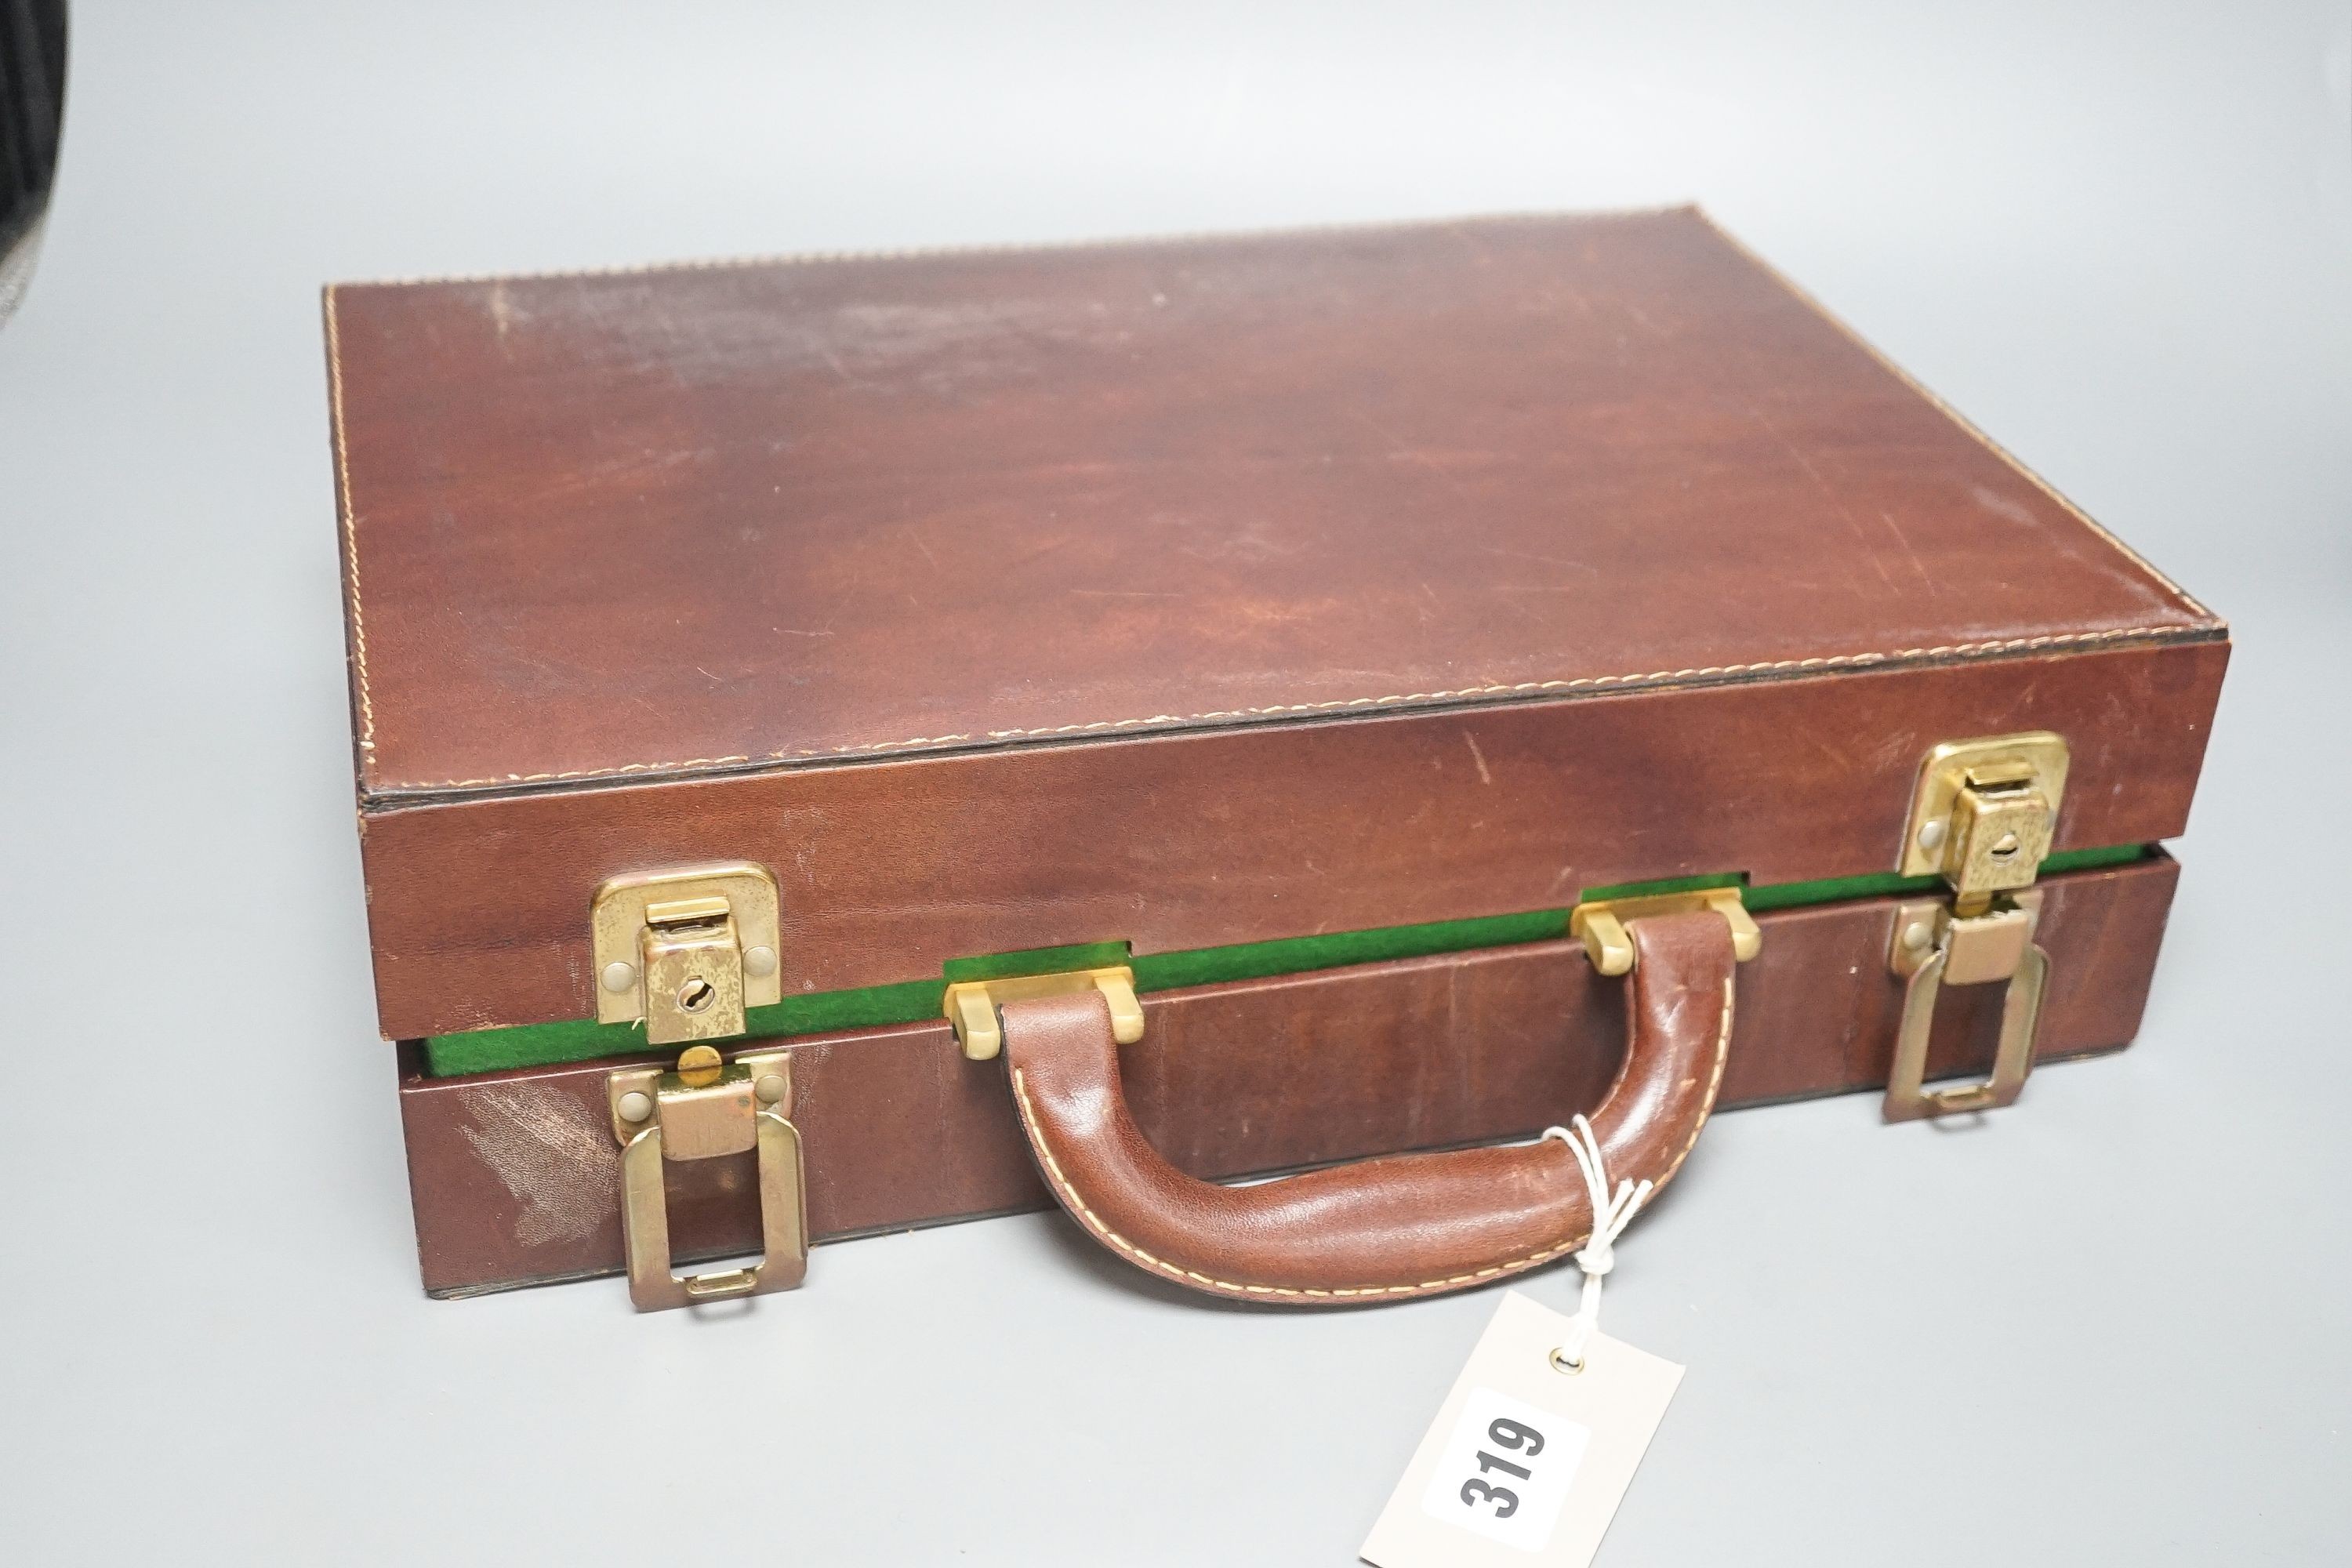 An Asprey tan leather cased games box